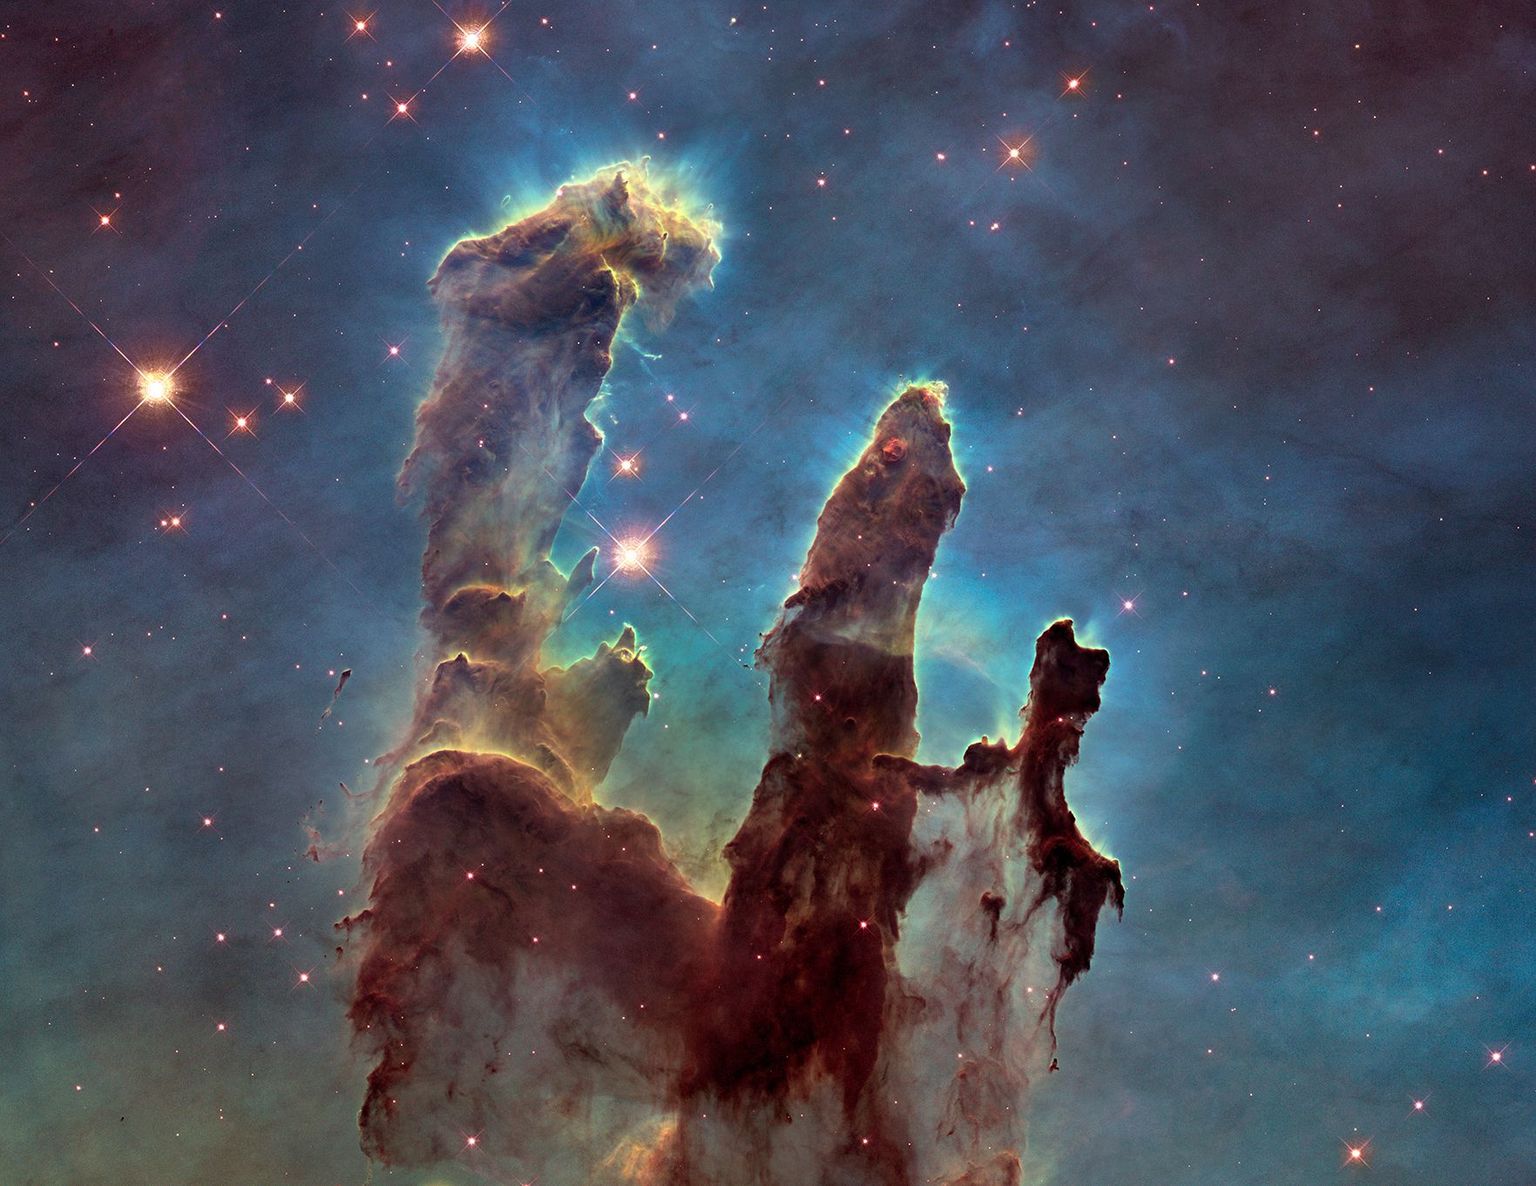 Eagle Nebula's "Pillars of Creation". Credits: NASA/ESA/Hubble Heritage Team (STScI/AURA)/J. Hester, P. Scowen (Arizona State U.)